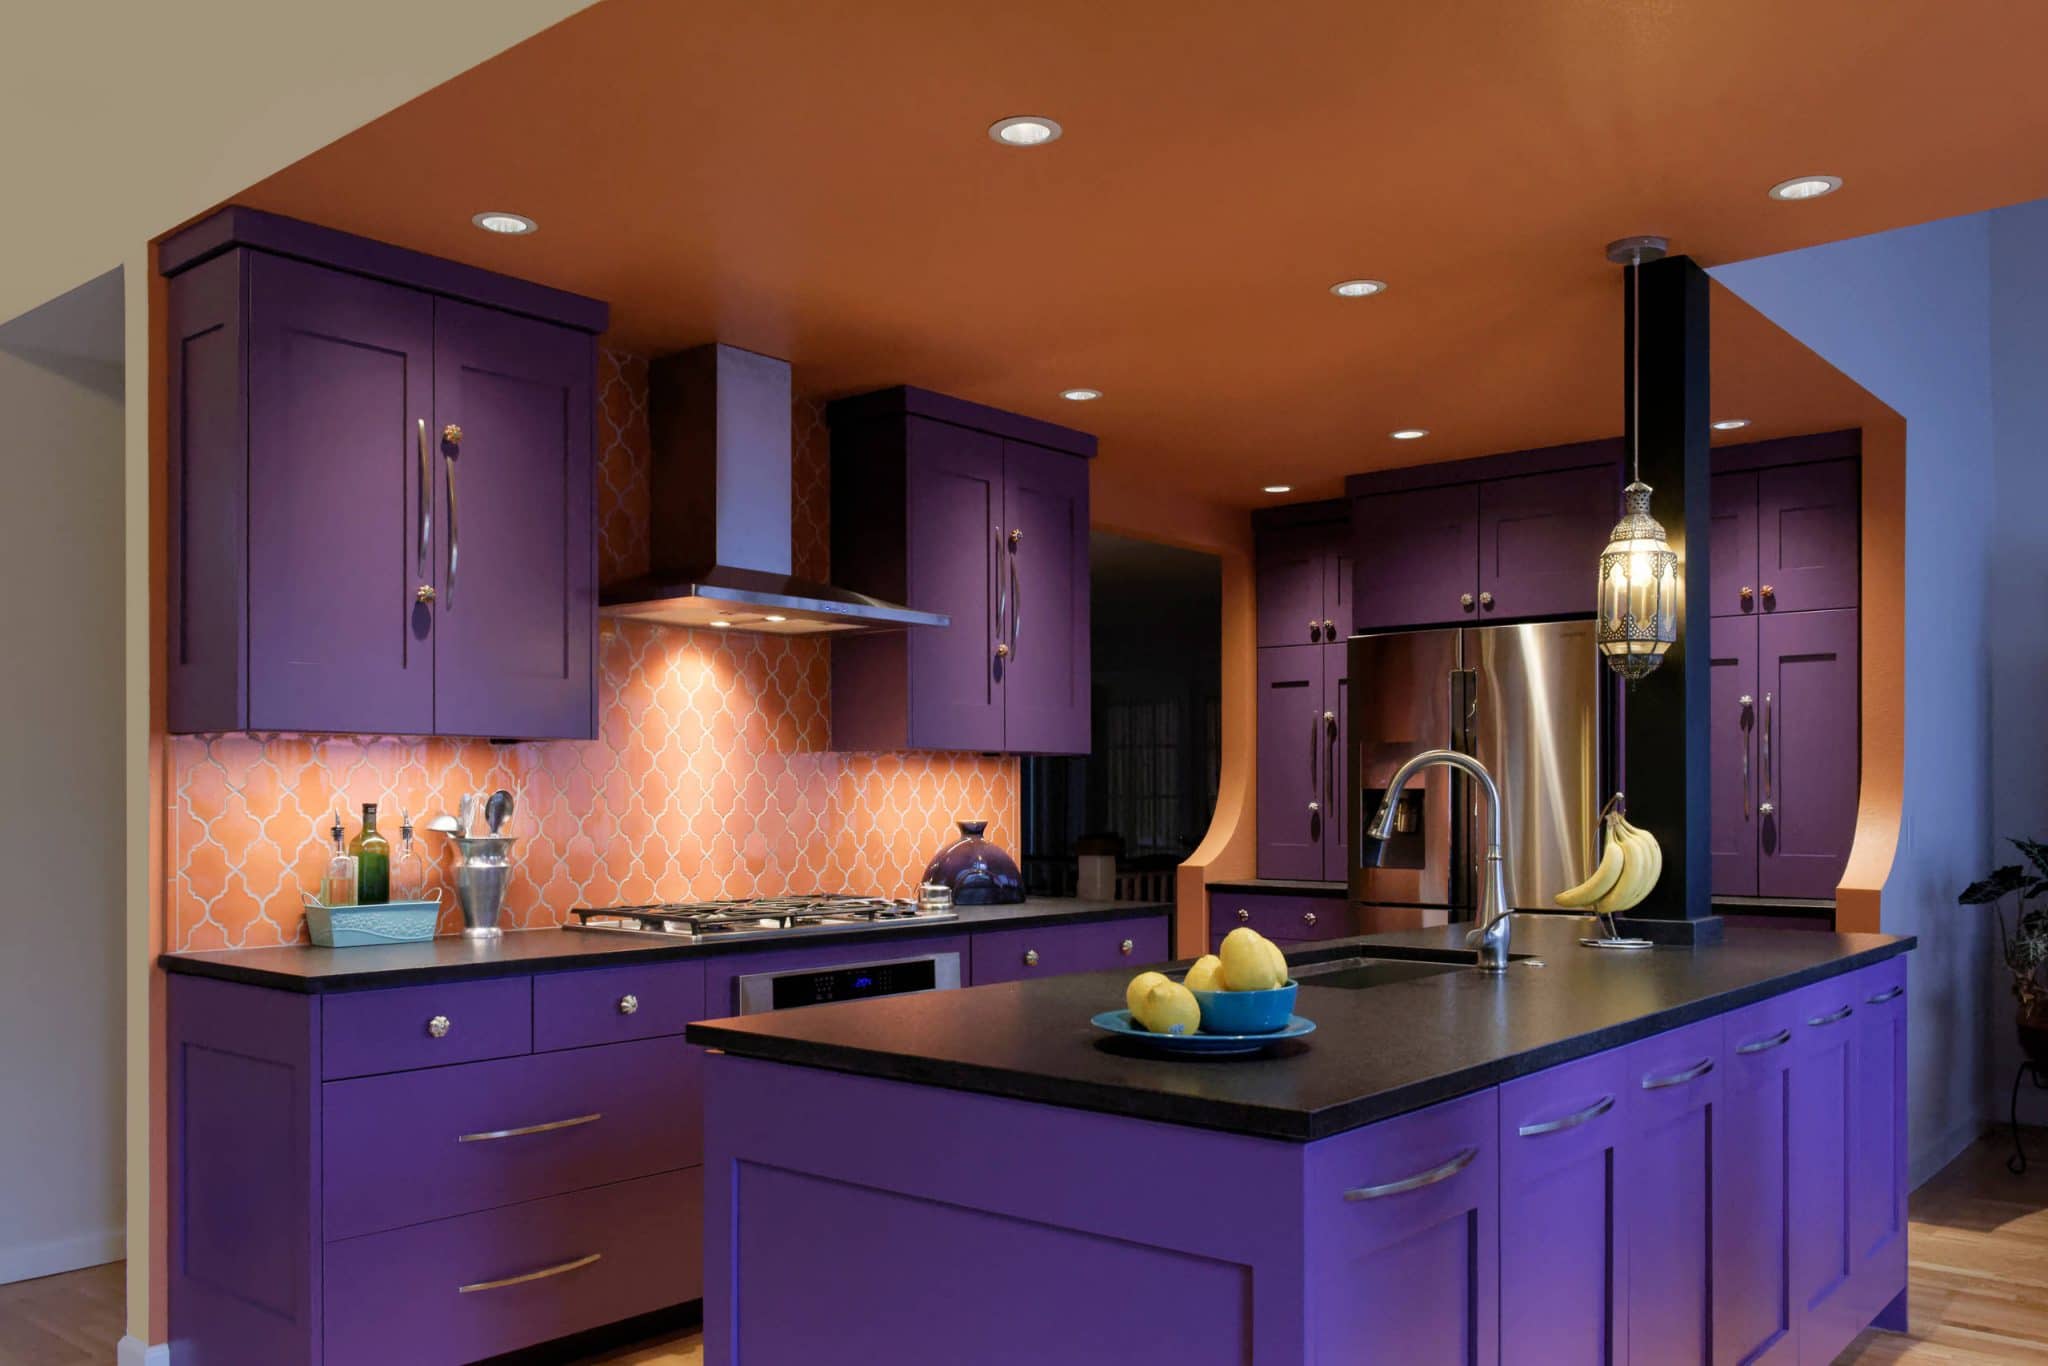 Purple Kitchen Cabinets Shaker Style 